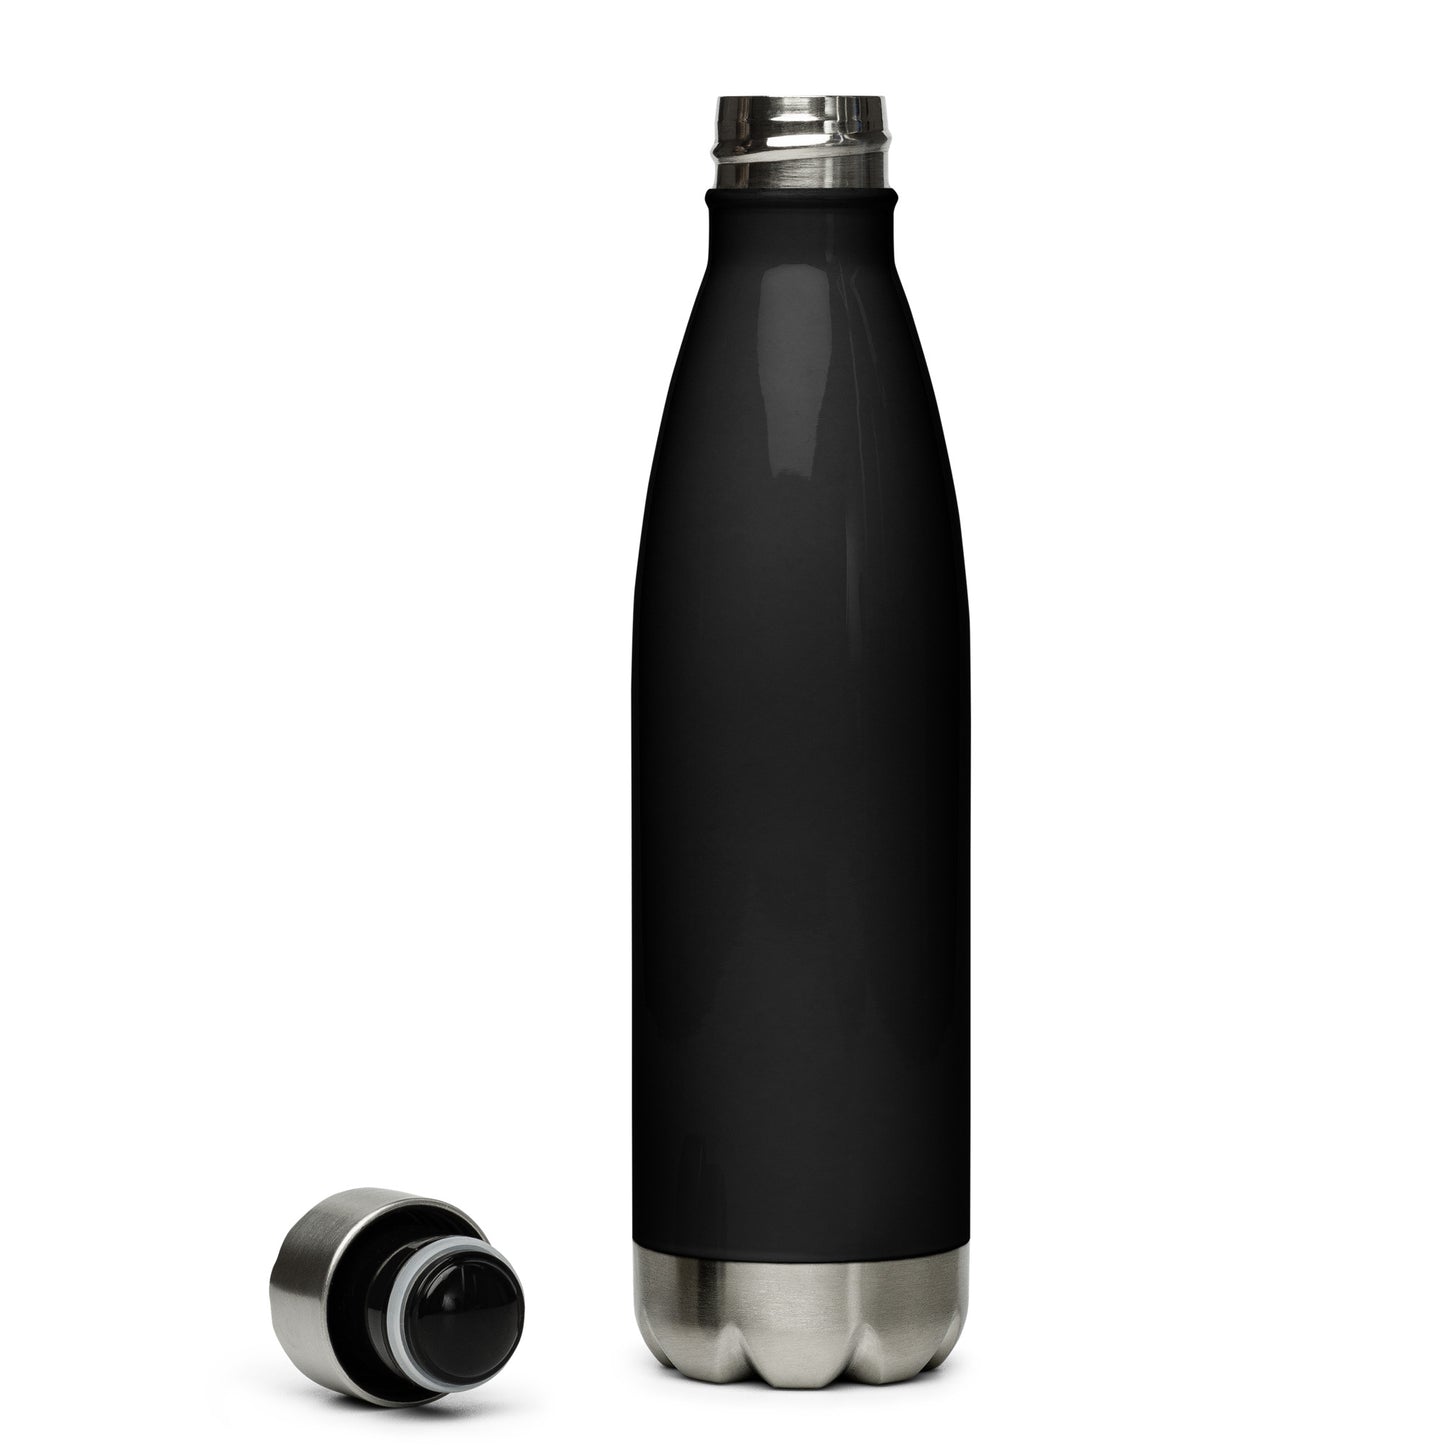 VR Stainless Steel Water Bottle